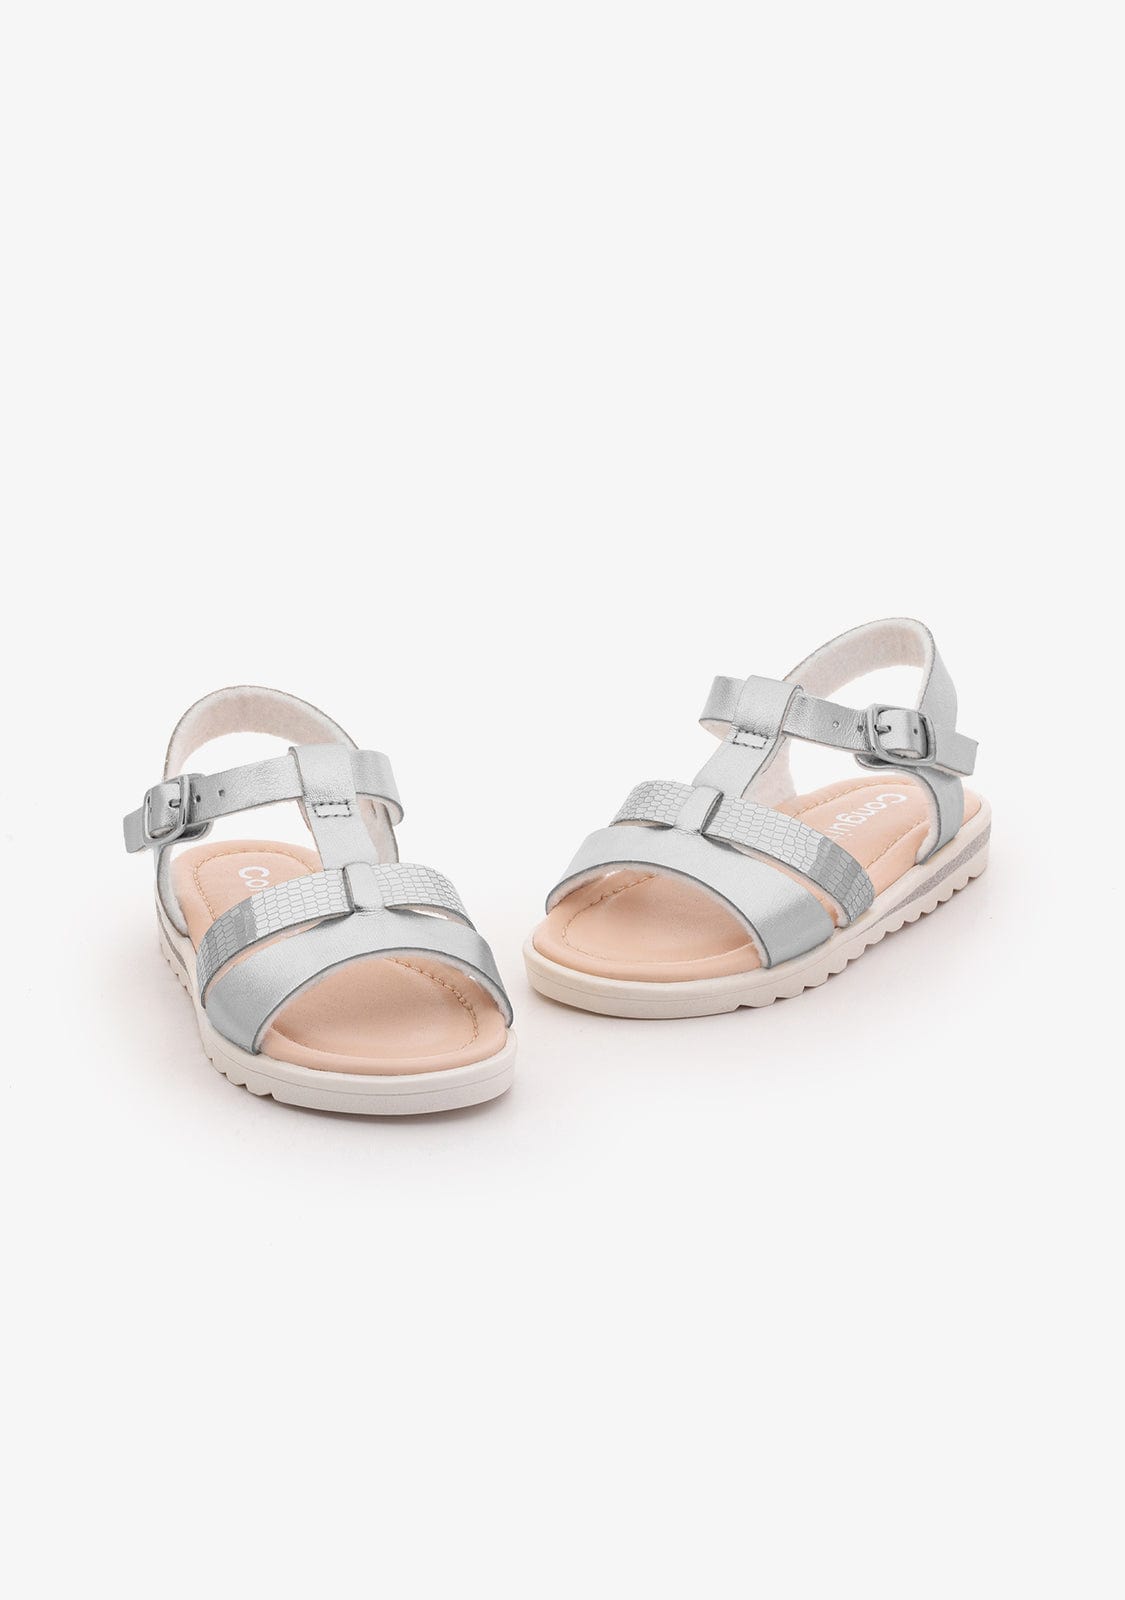 CONGUITOS Shoes Girl's Silver Metallic Sandals